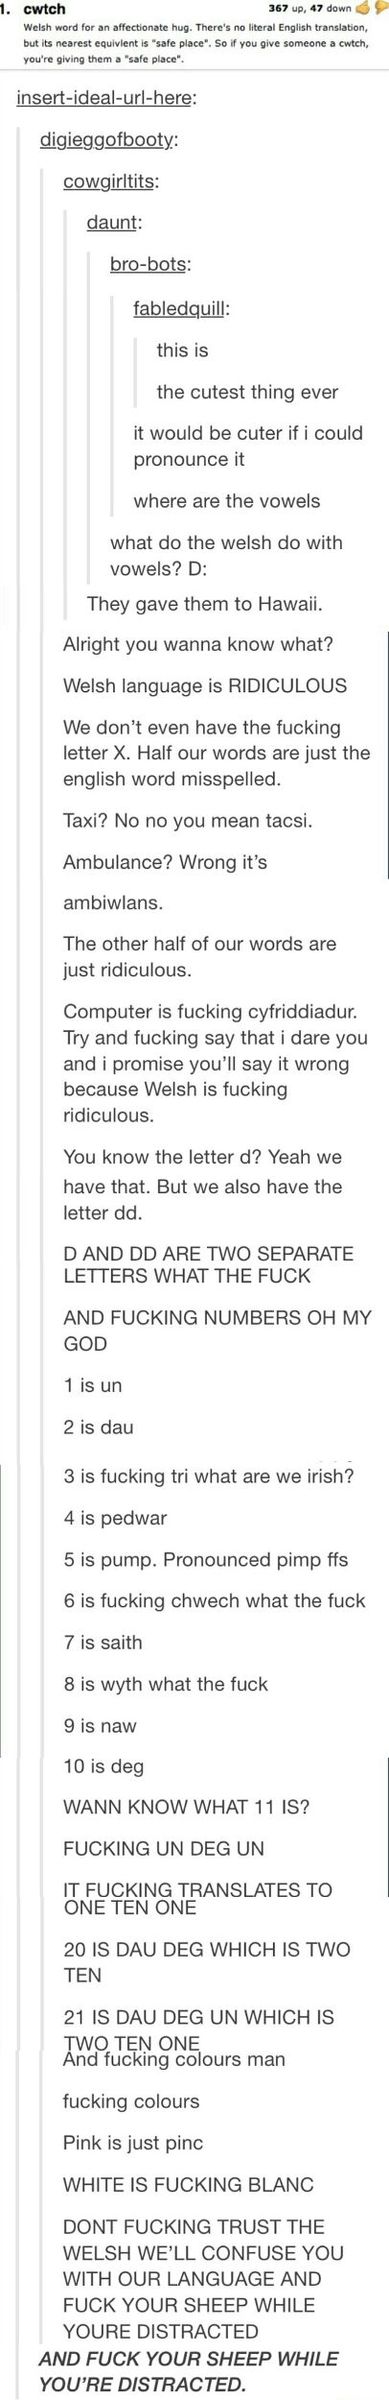 Welsh people, you crazy - meme